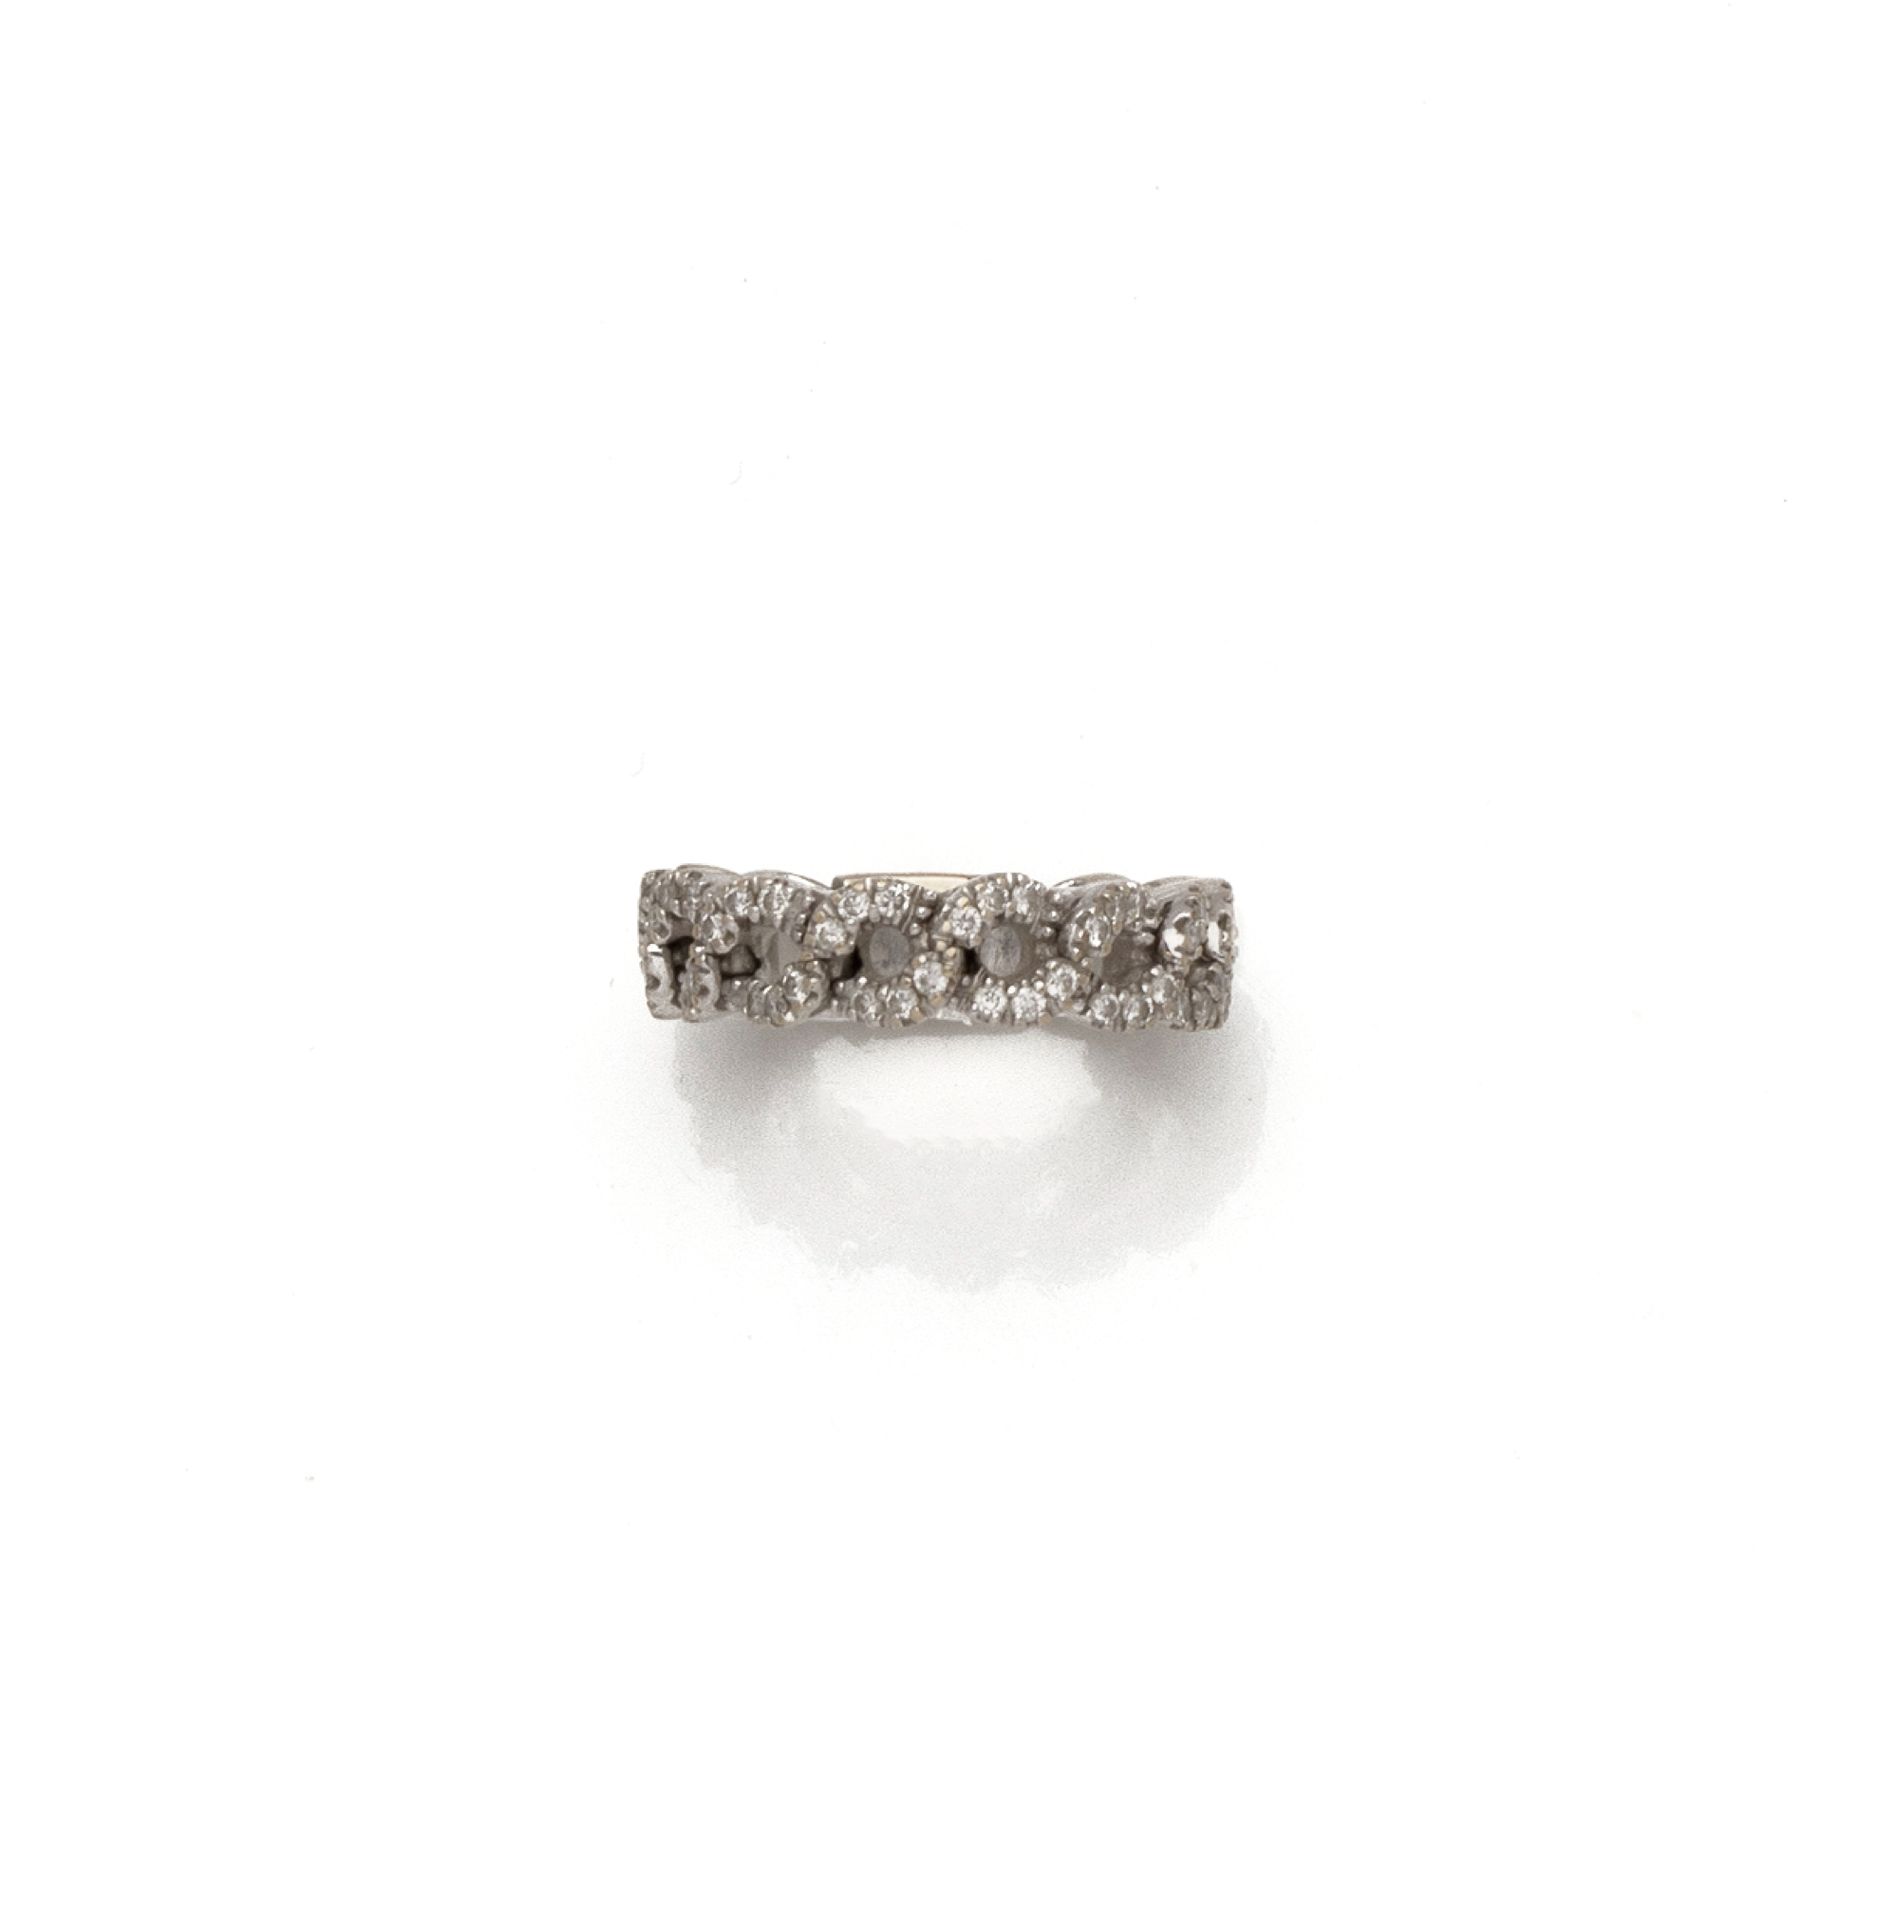 Null 18K(750/1000)白金戒指，交错设计，装饰有明亮式切割钻石。
手指尺寸：58 - 毛重：7.9 g